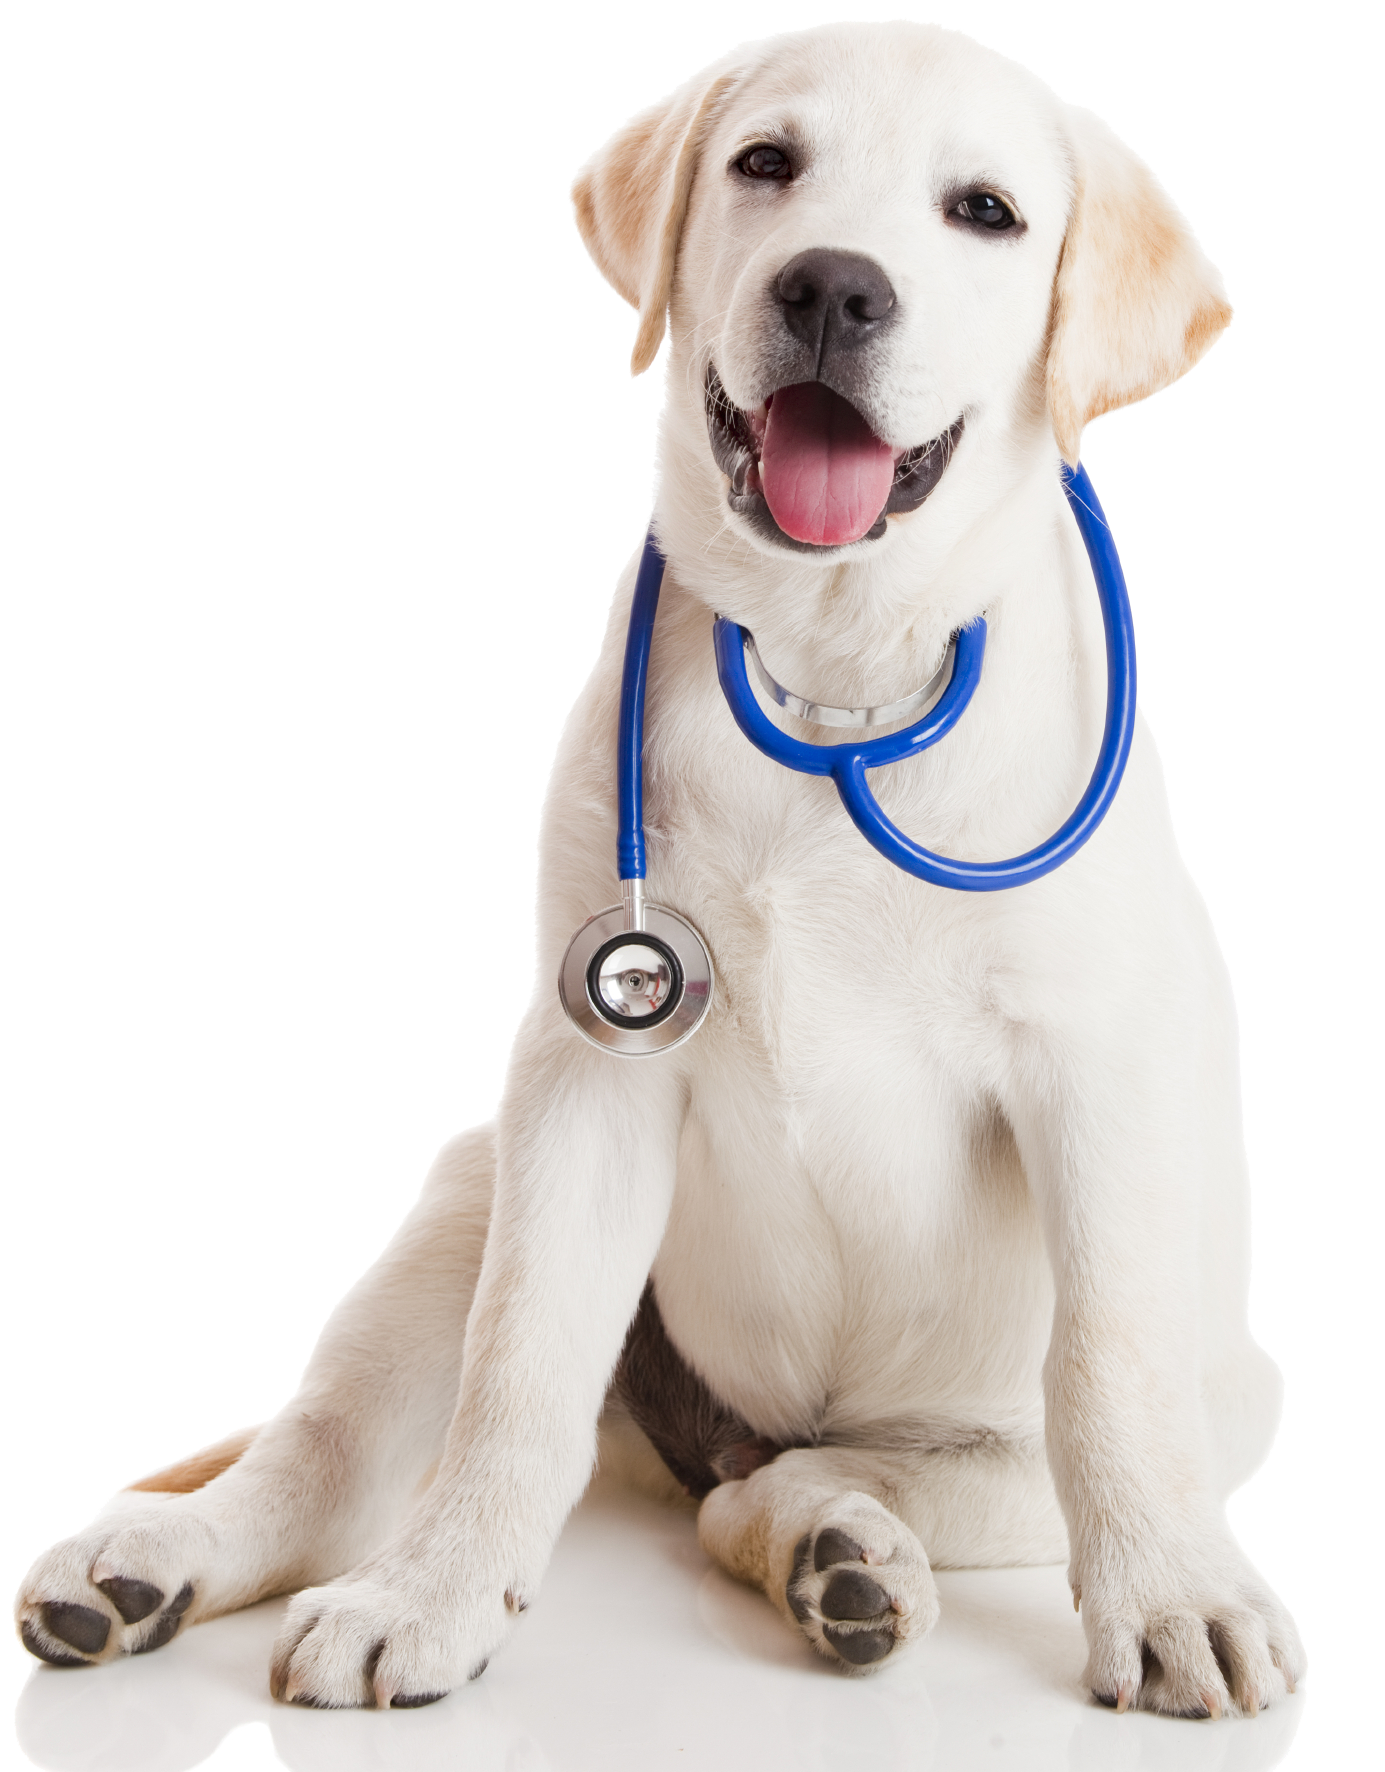 Kineto pet. Лабрадор доктор. Собака доктор. Собака со стетоскопом. Собака с фонендоскопом.